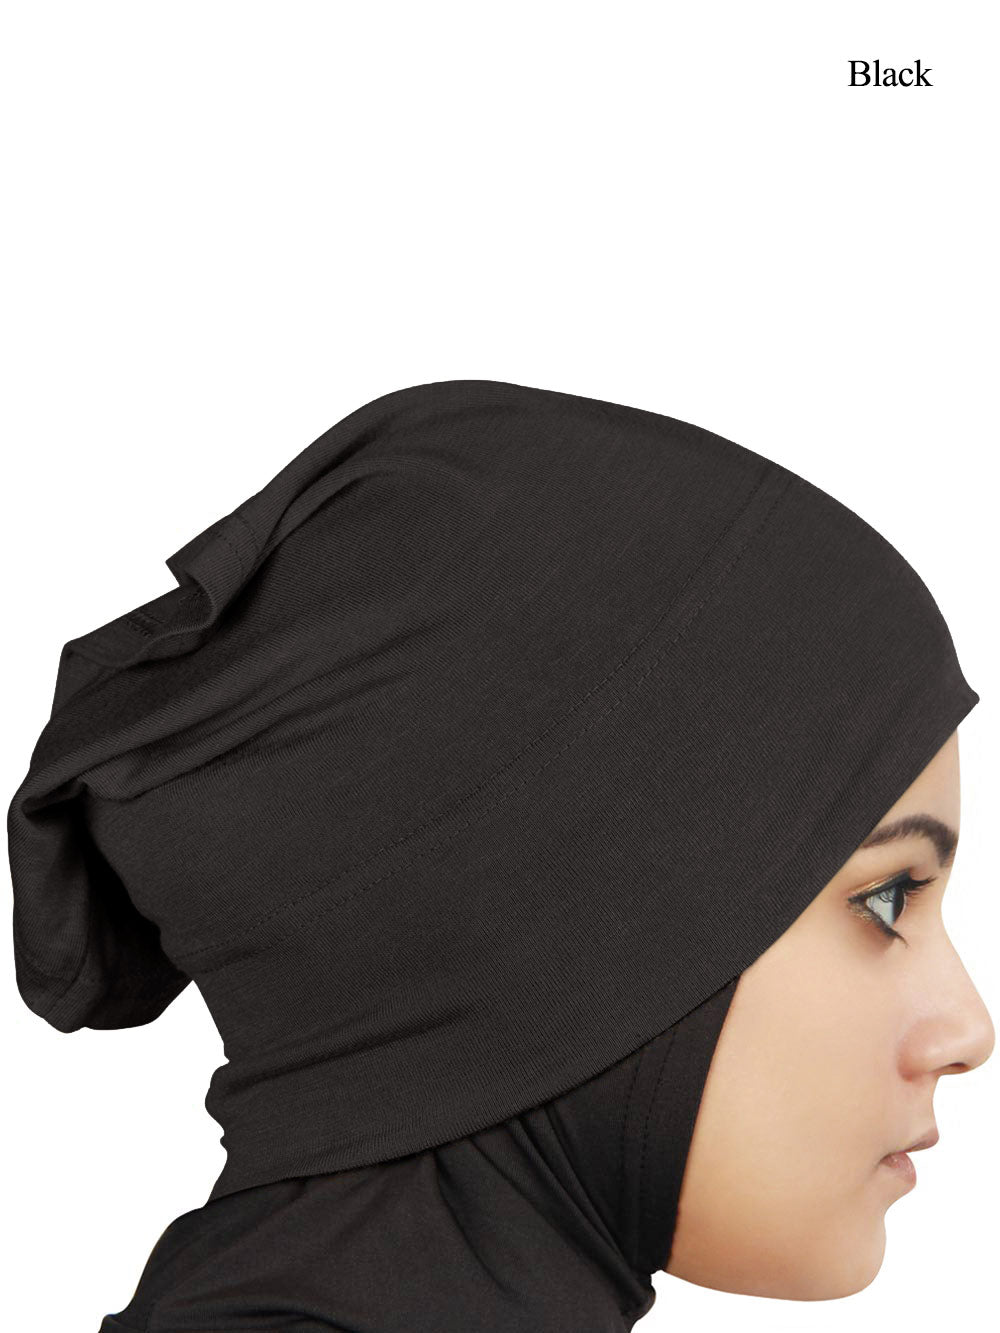 Two Piece Instant Black Viscose Jersey Hijab